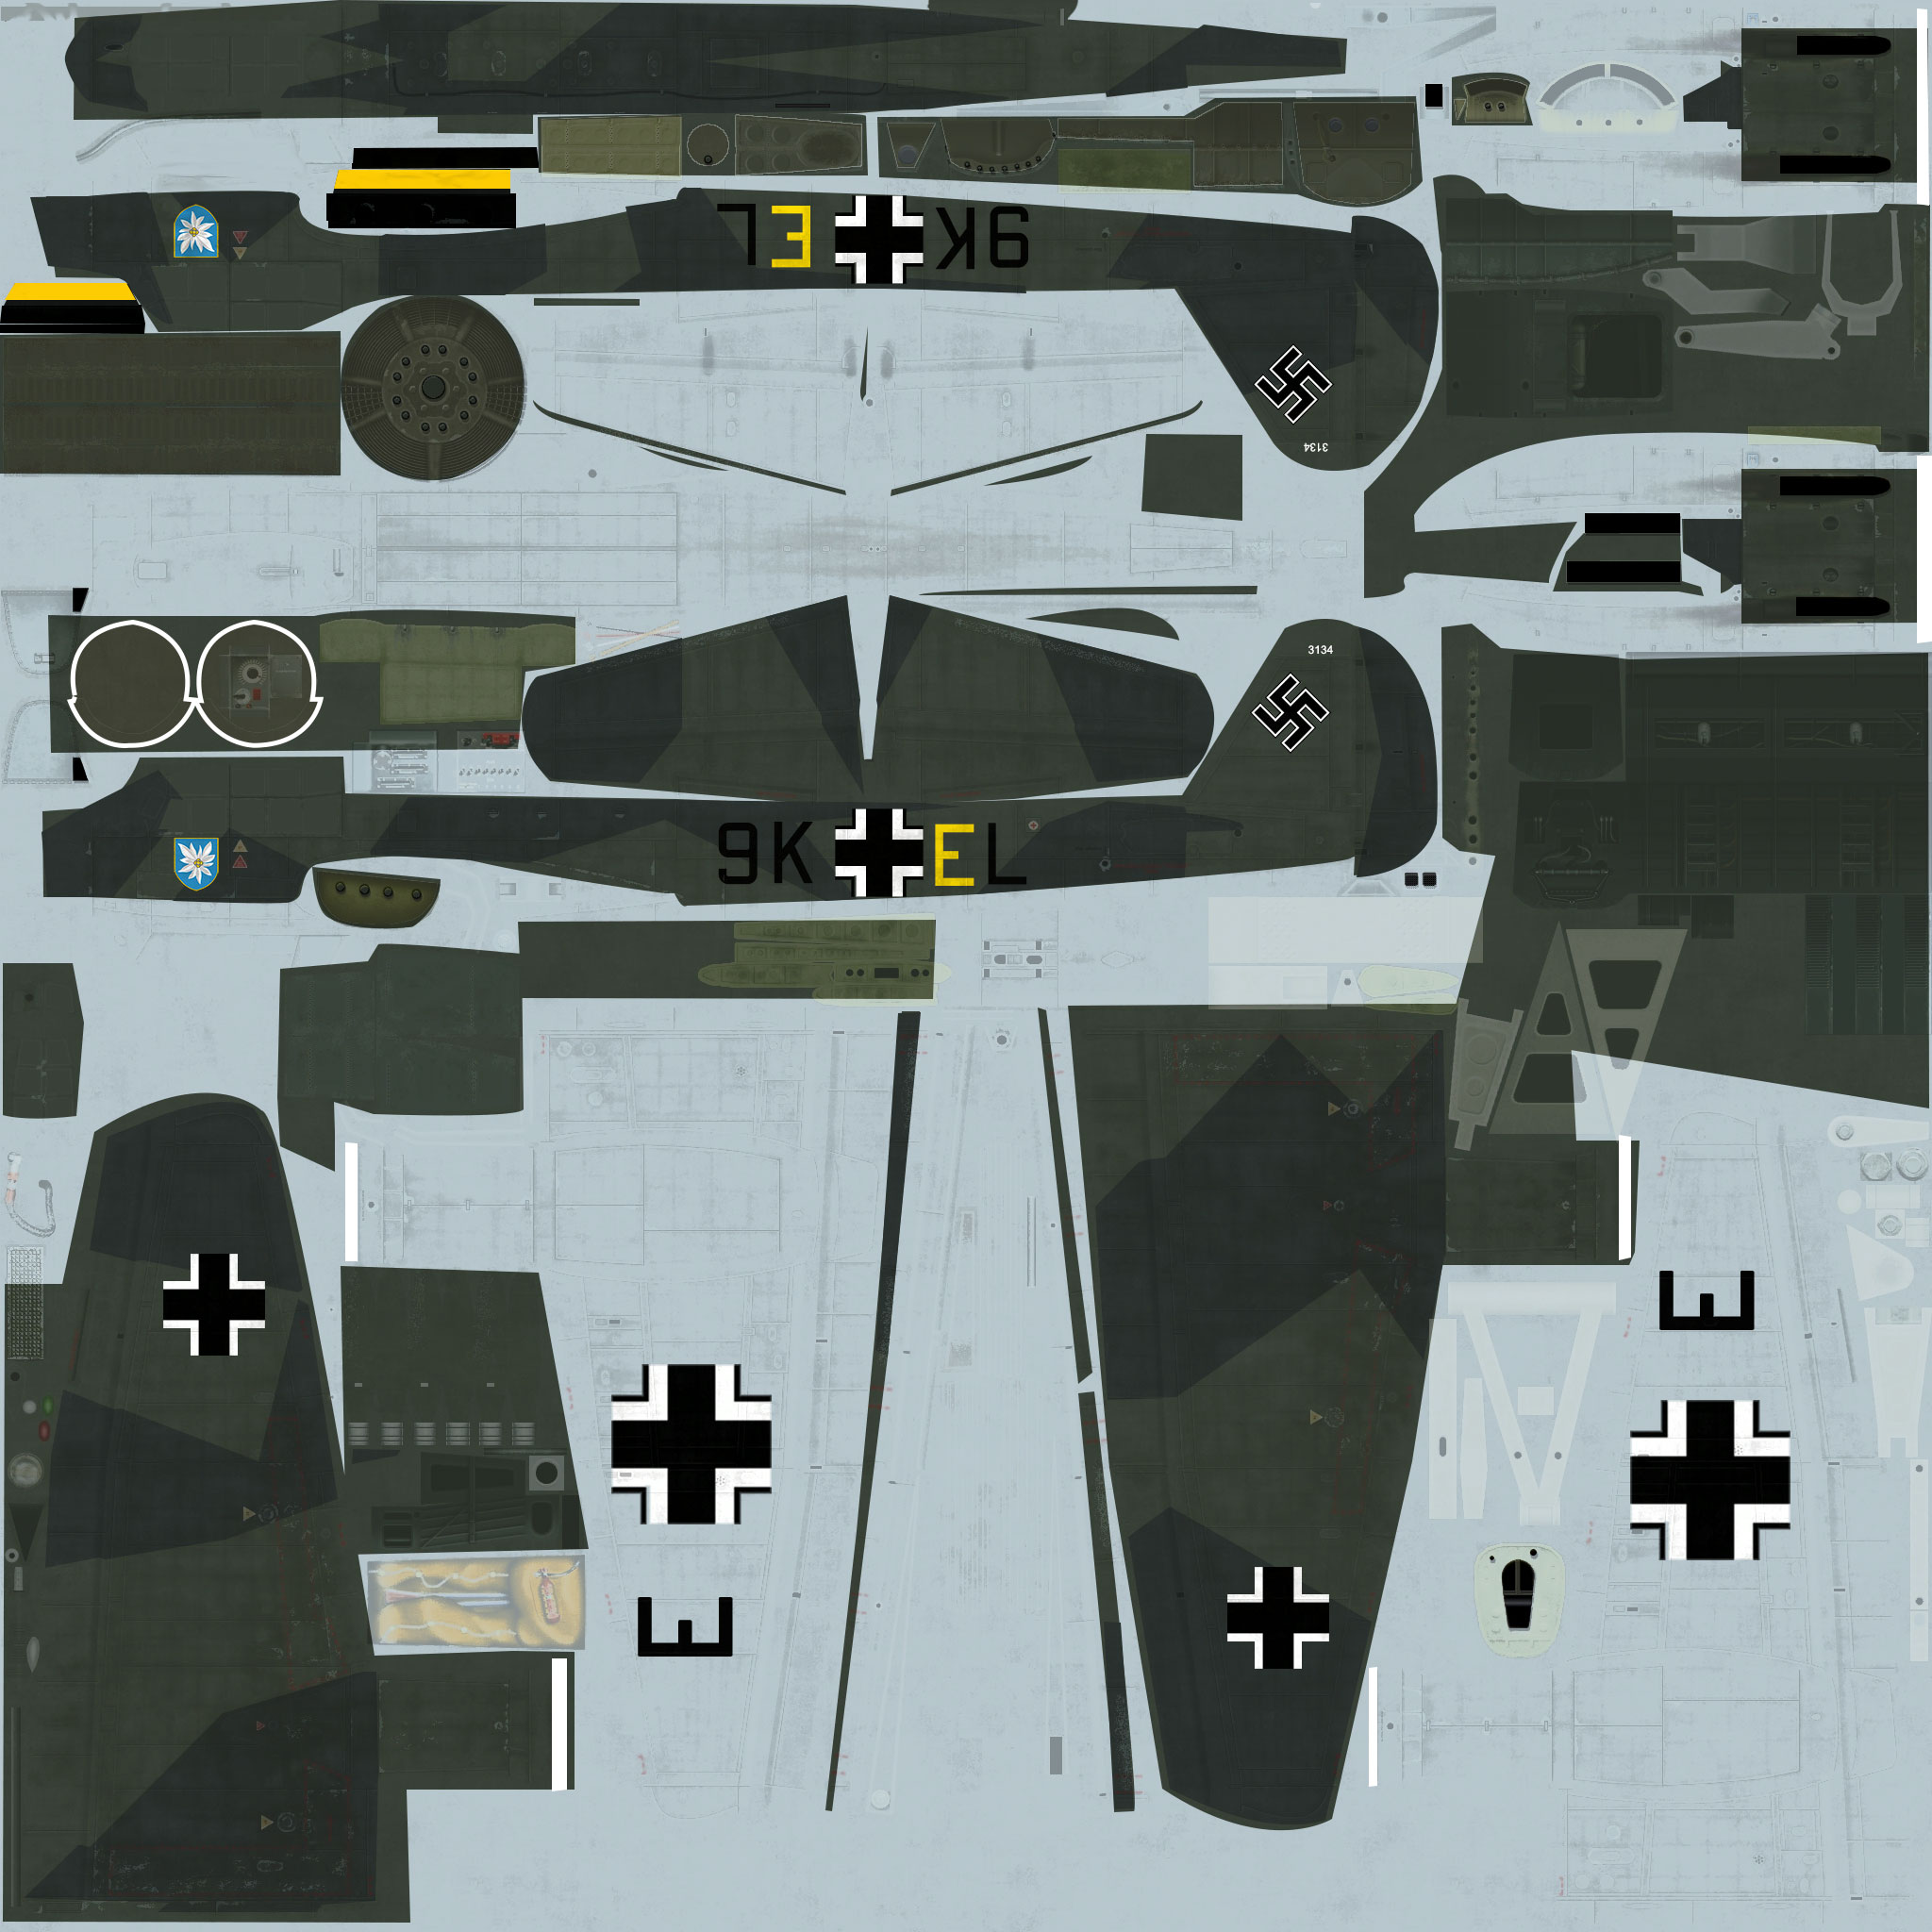 COD asisbiz Ju 88A 3.KG51 9K+EL WNr 3134 Battle of Britain 1940 41